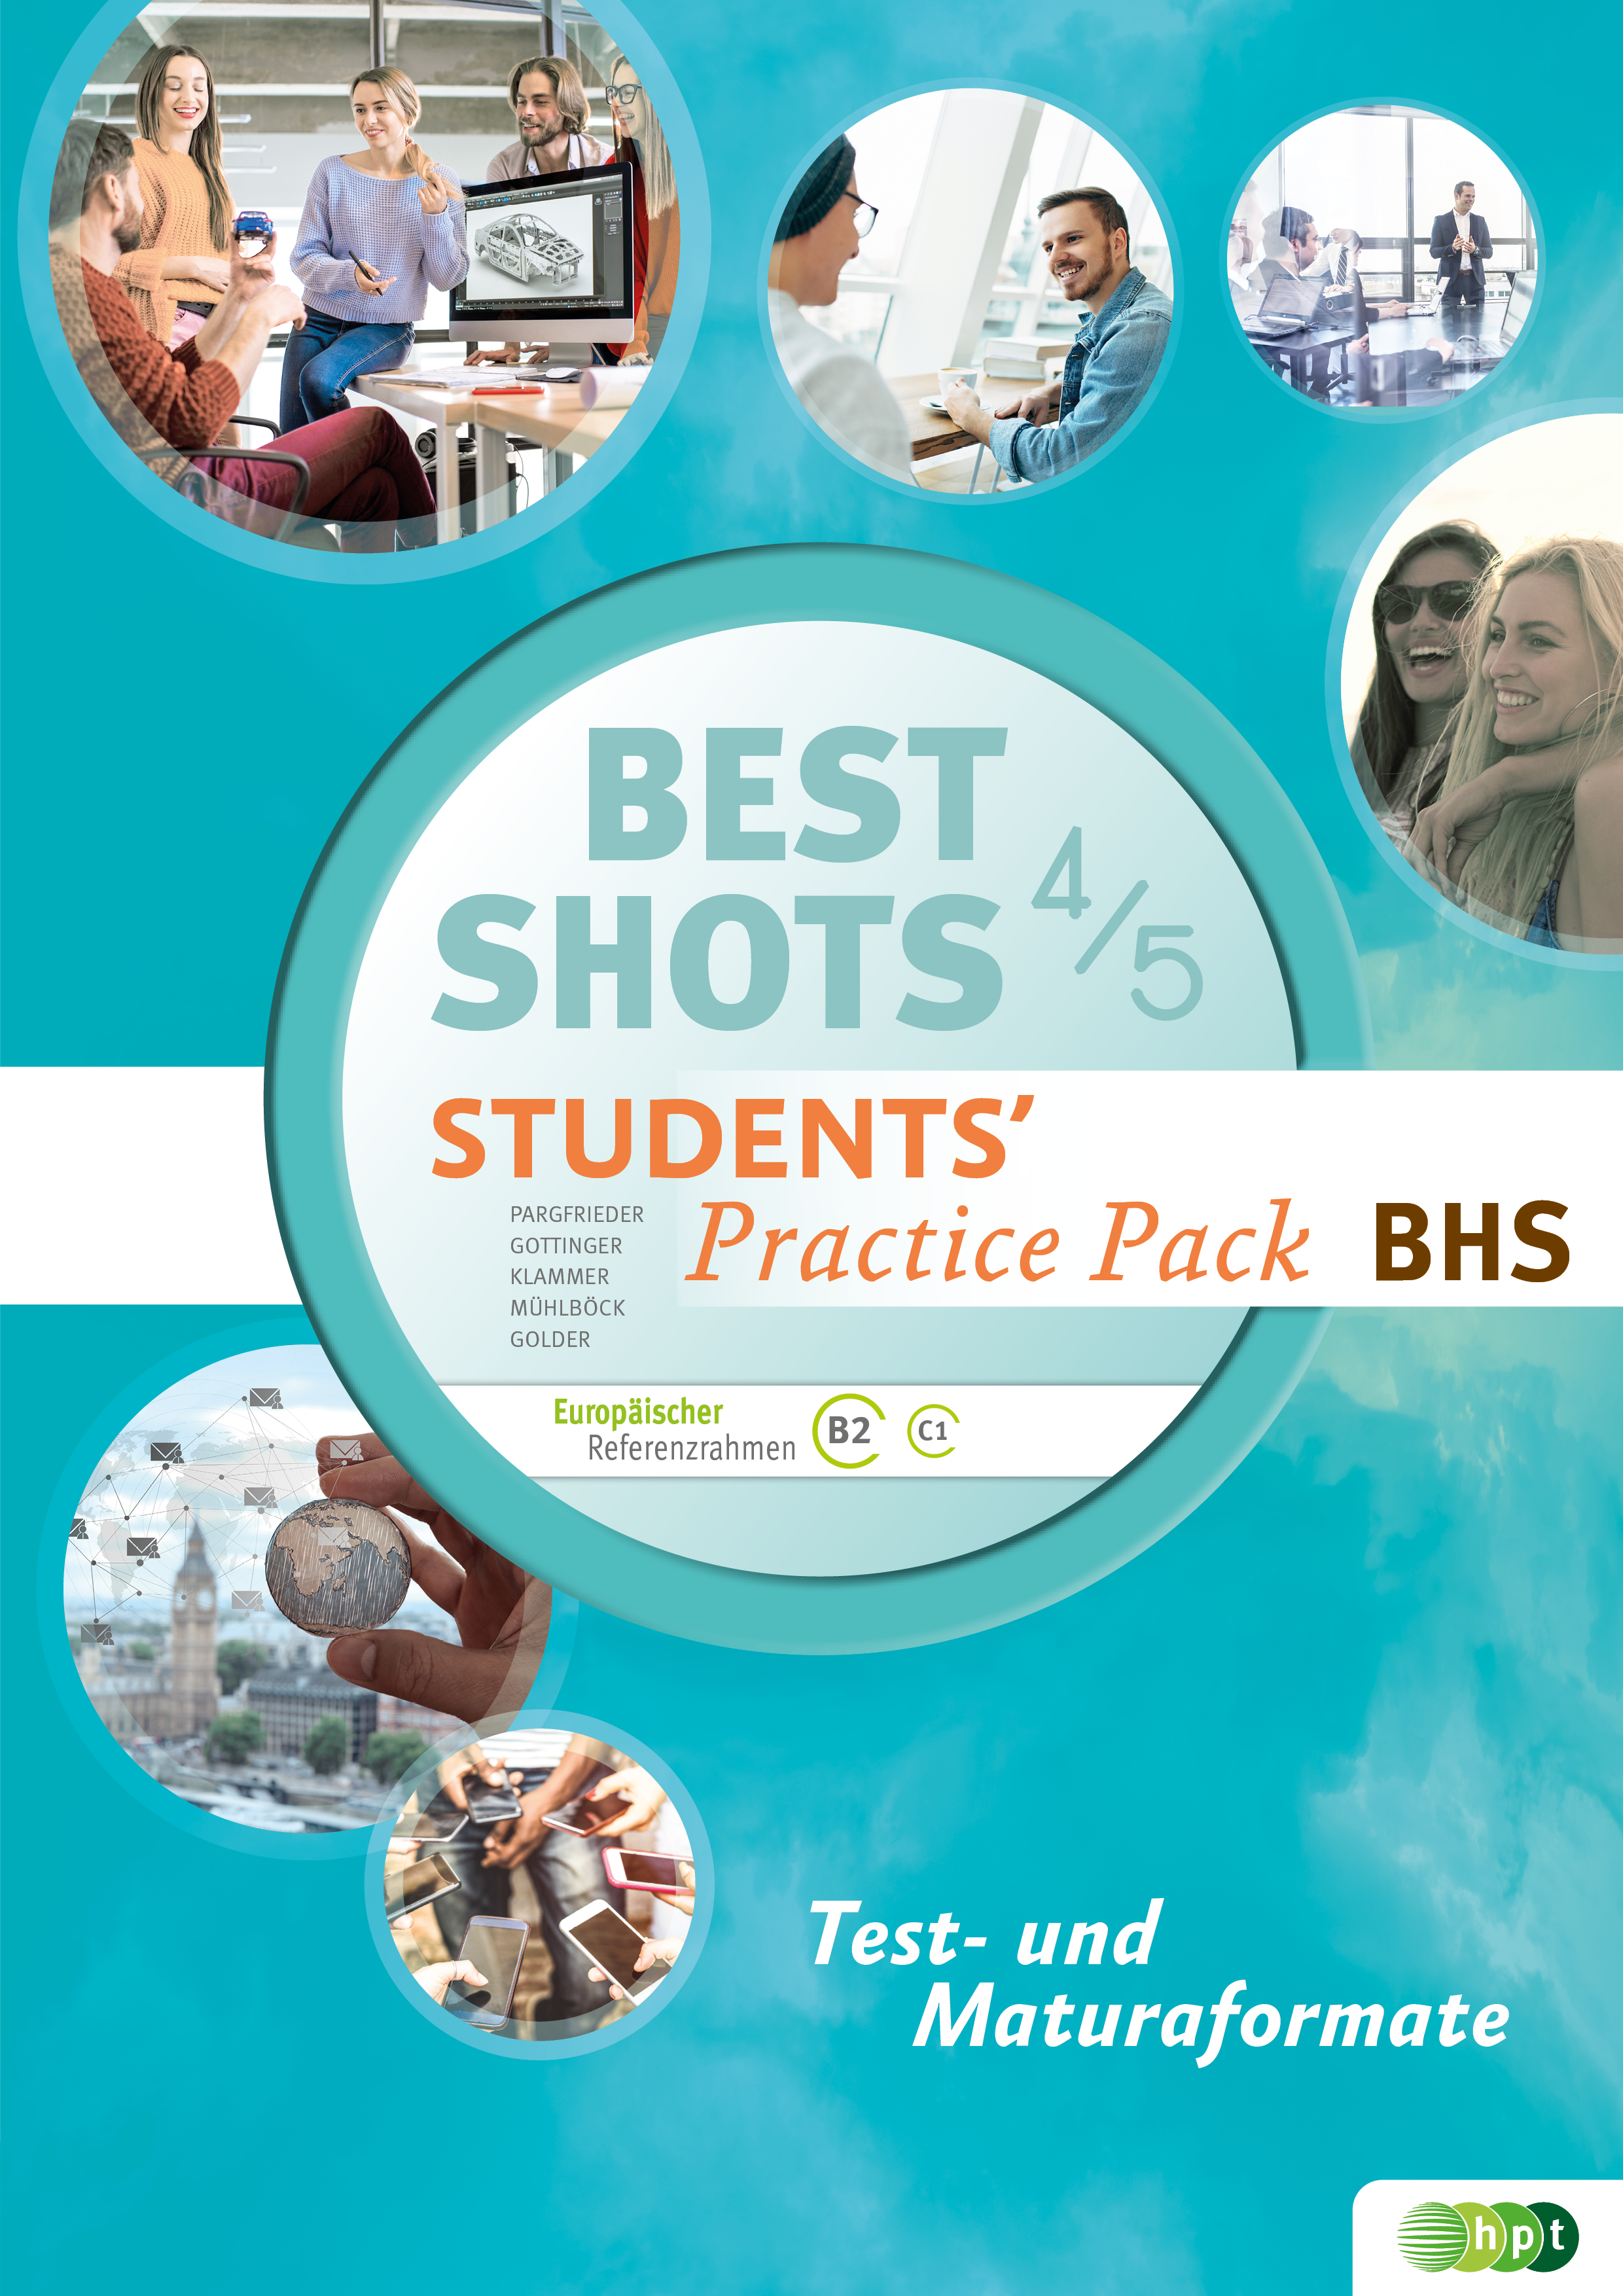 Best_shots_4-5_Students_Practice_Pack